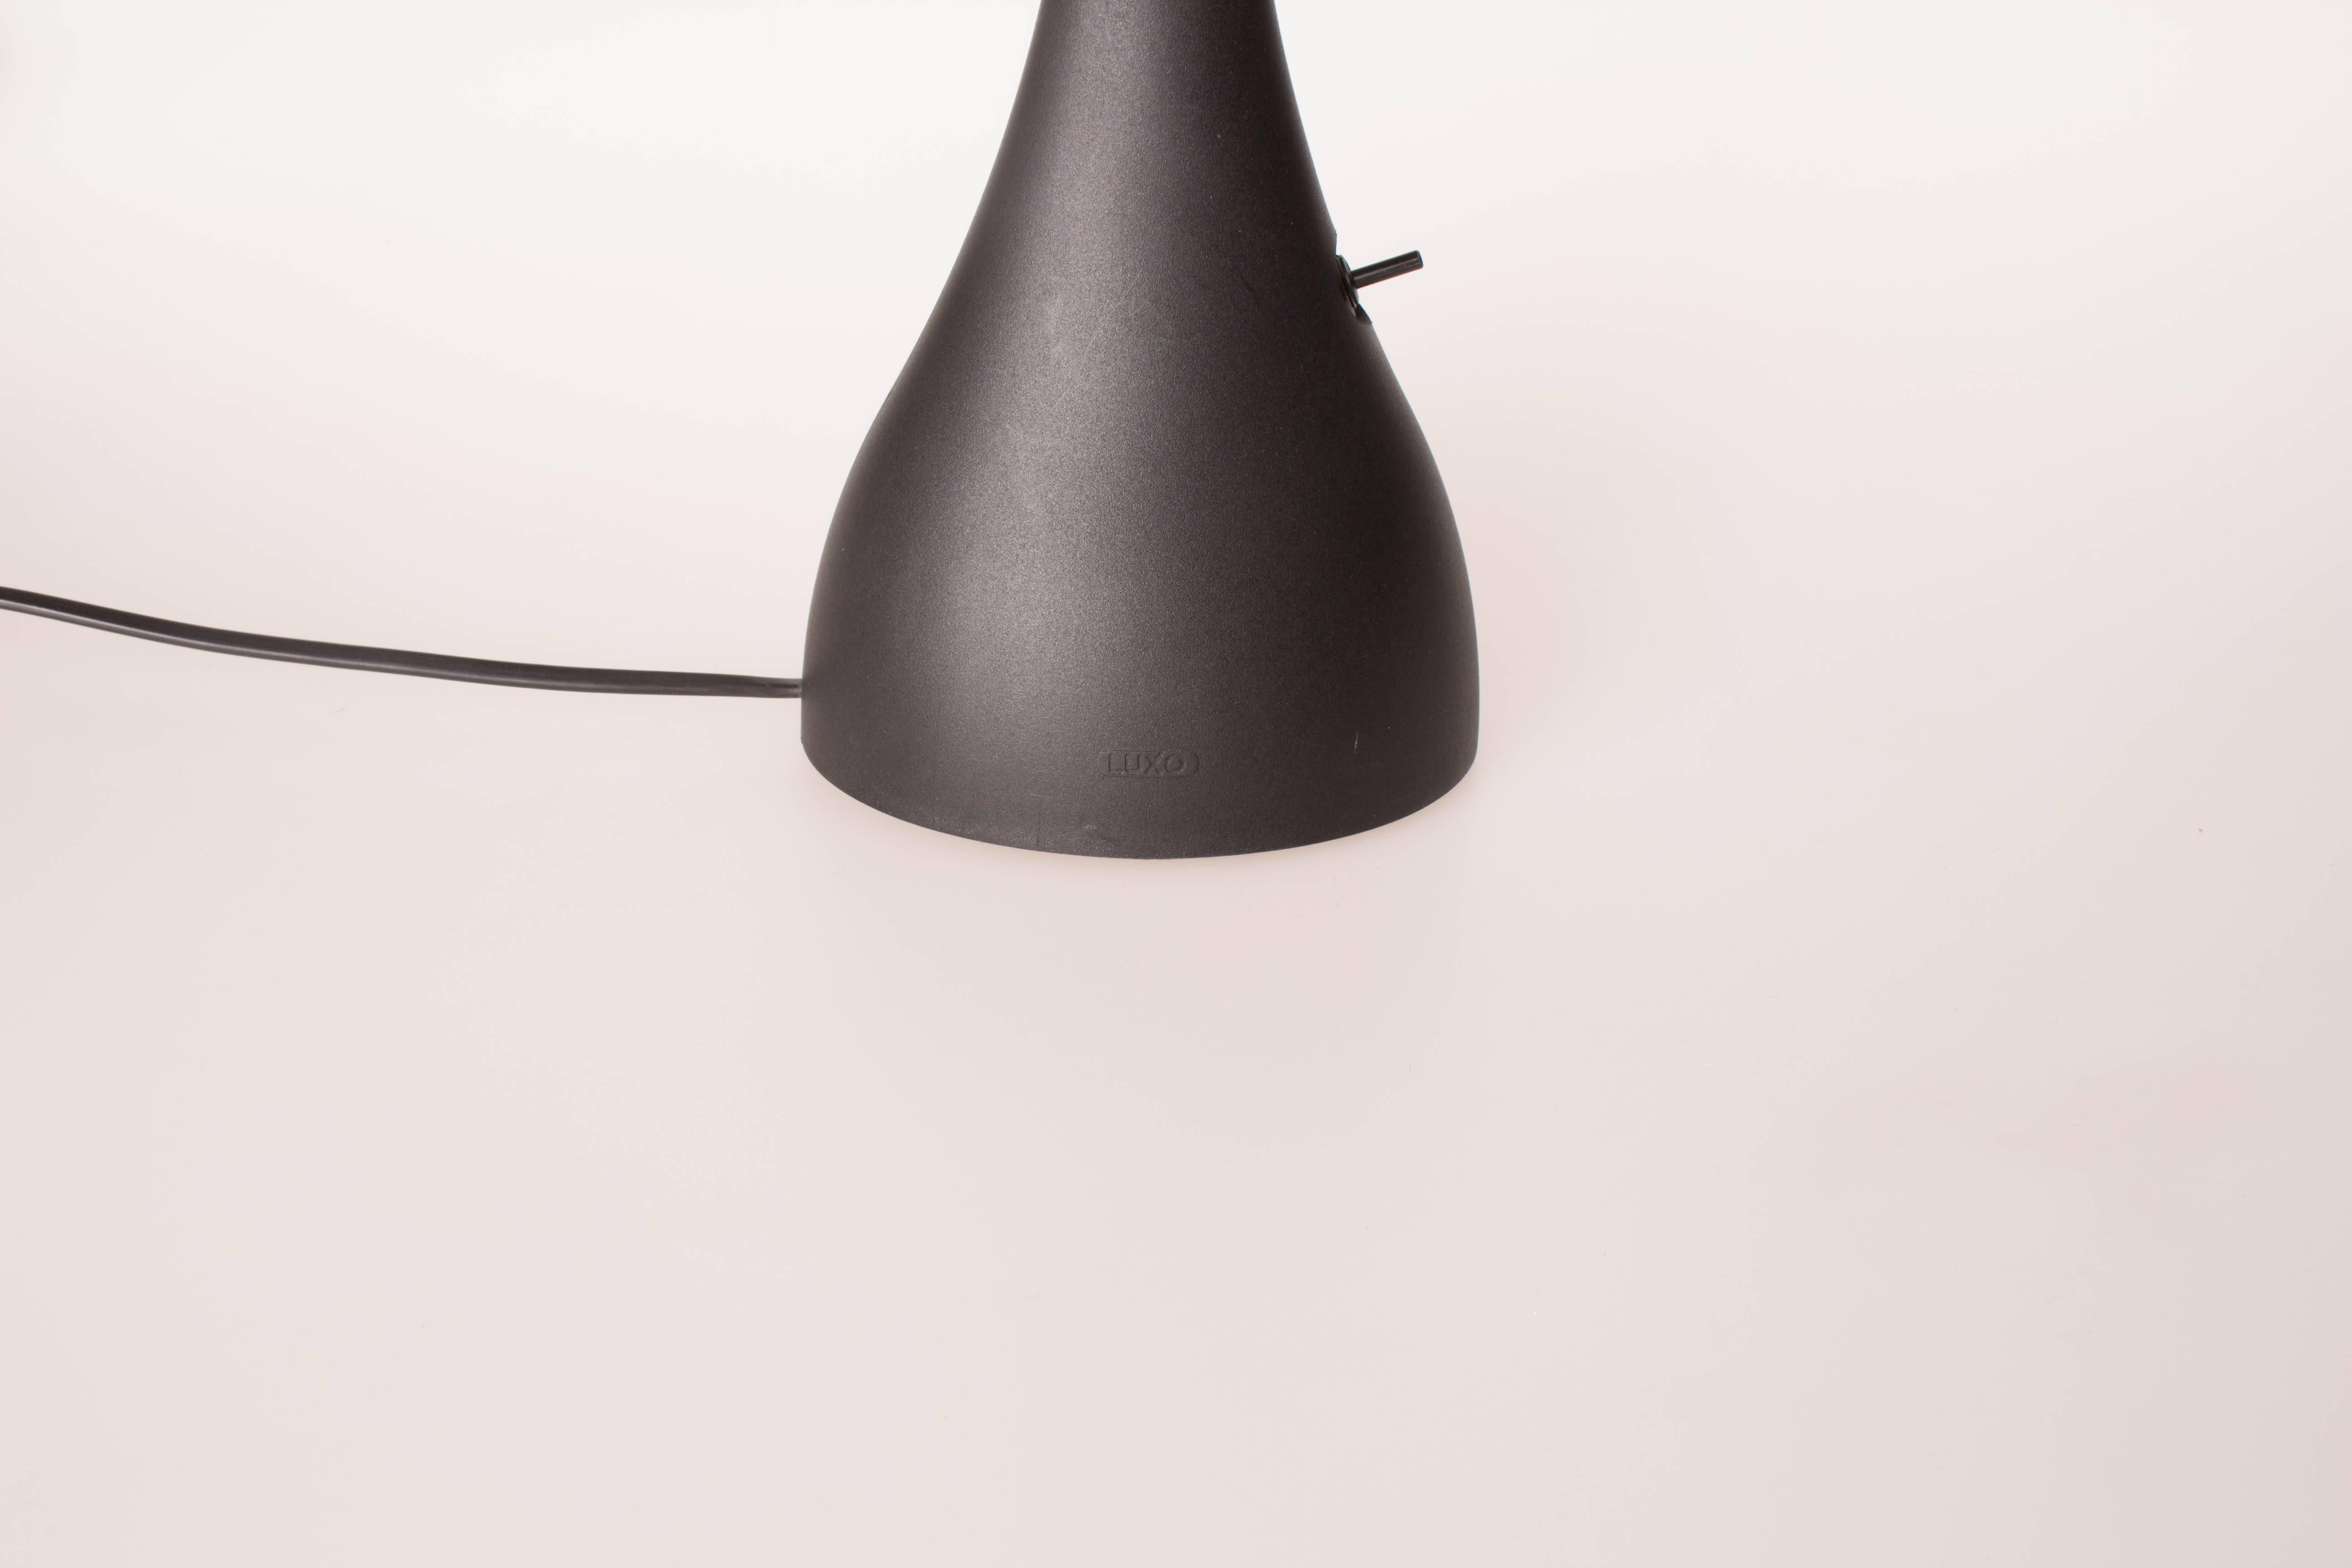 1990s Heron lamp by Japanese designer Isao Hosoe for Luxo. Design classic

Black plastic. Late 20th century. Height 65 cm.